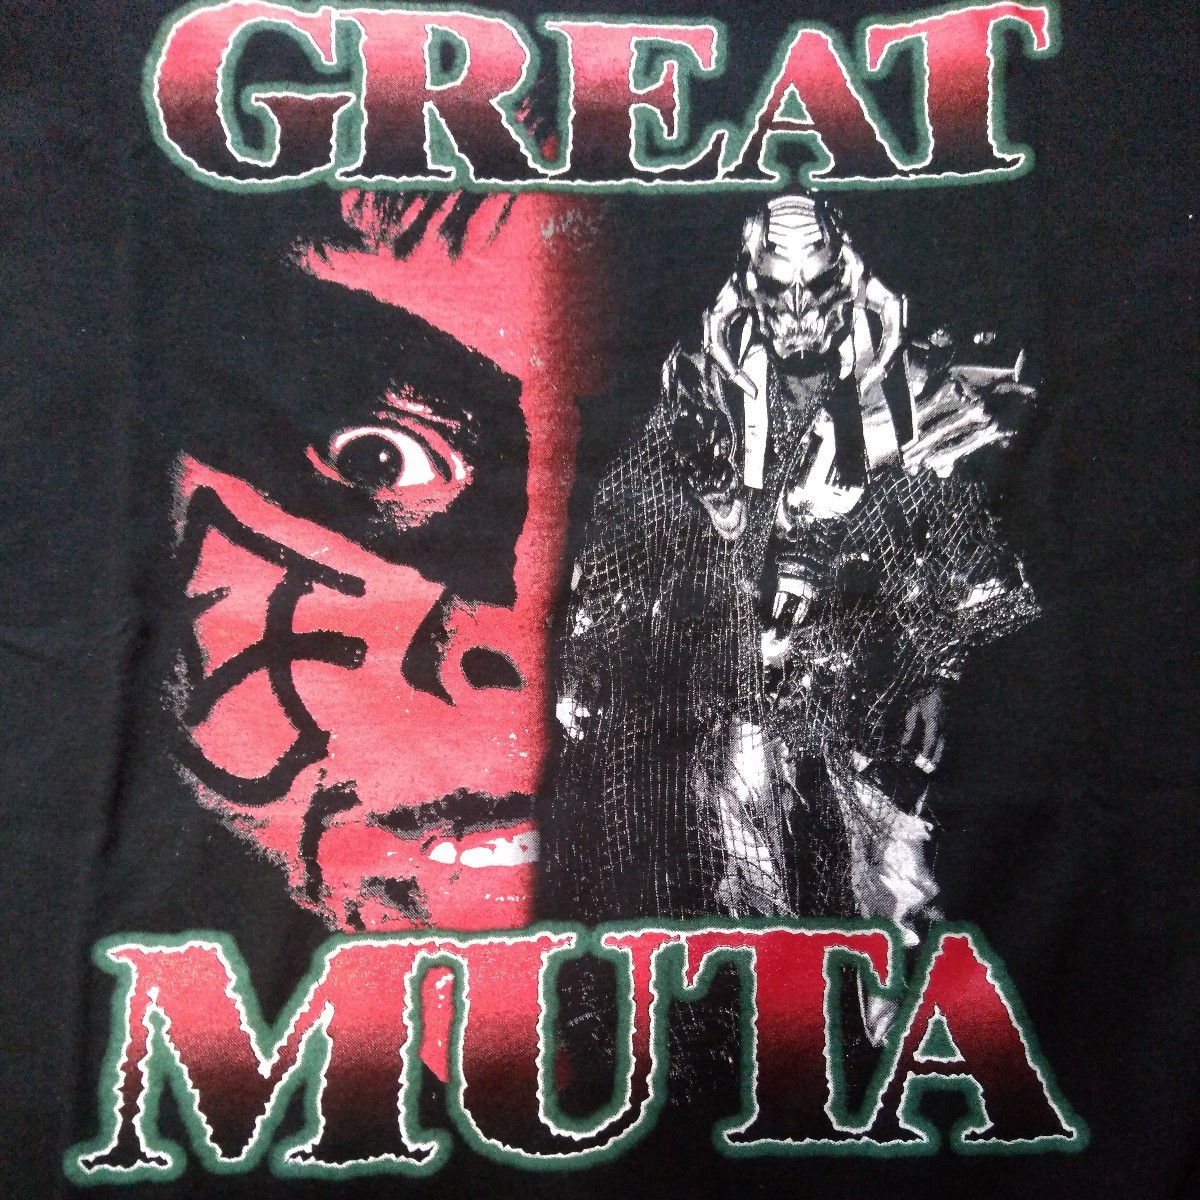  T-shirt The * Great Muta Professional Wrestling . wistaria .. New Japan Professional Wrestling all Japan Professional Wrestling WCW WWF WWE..L size 